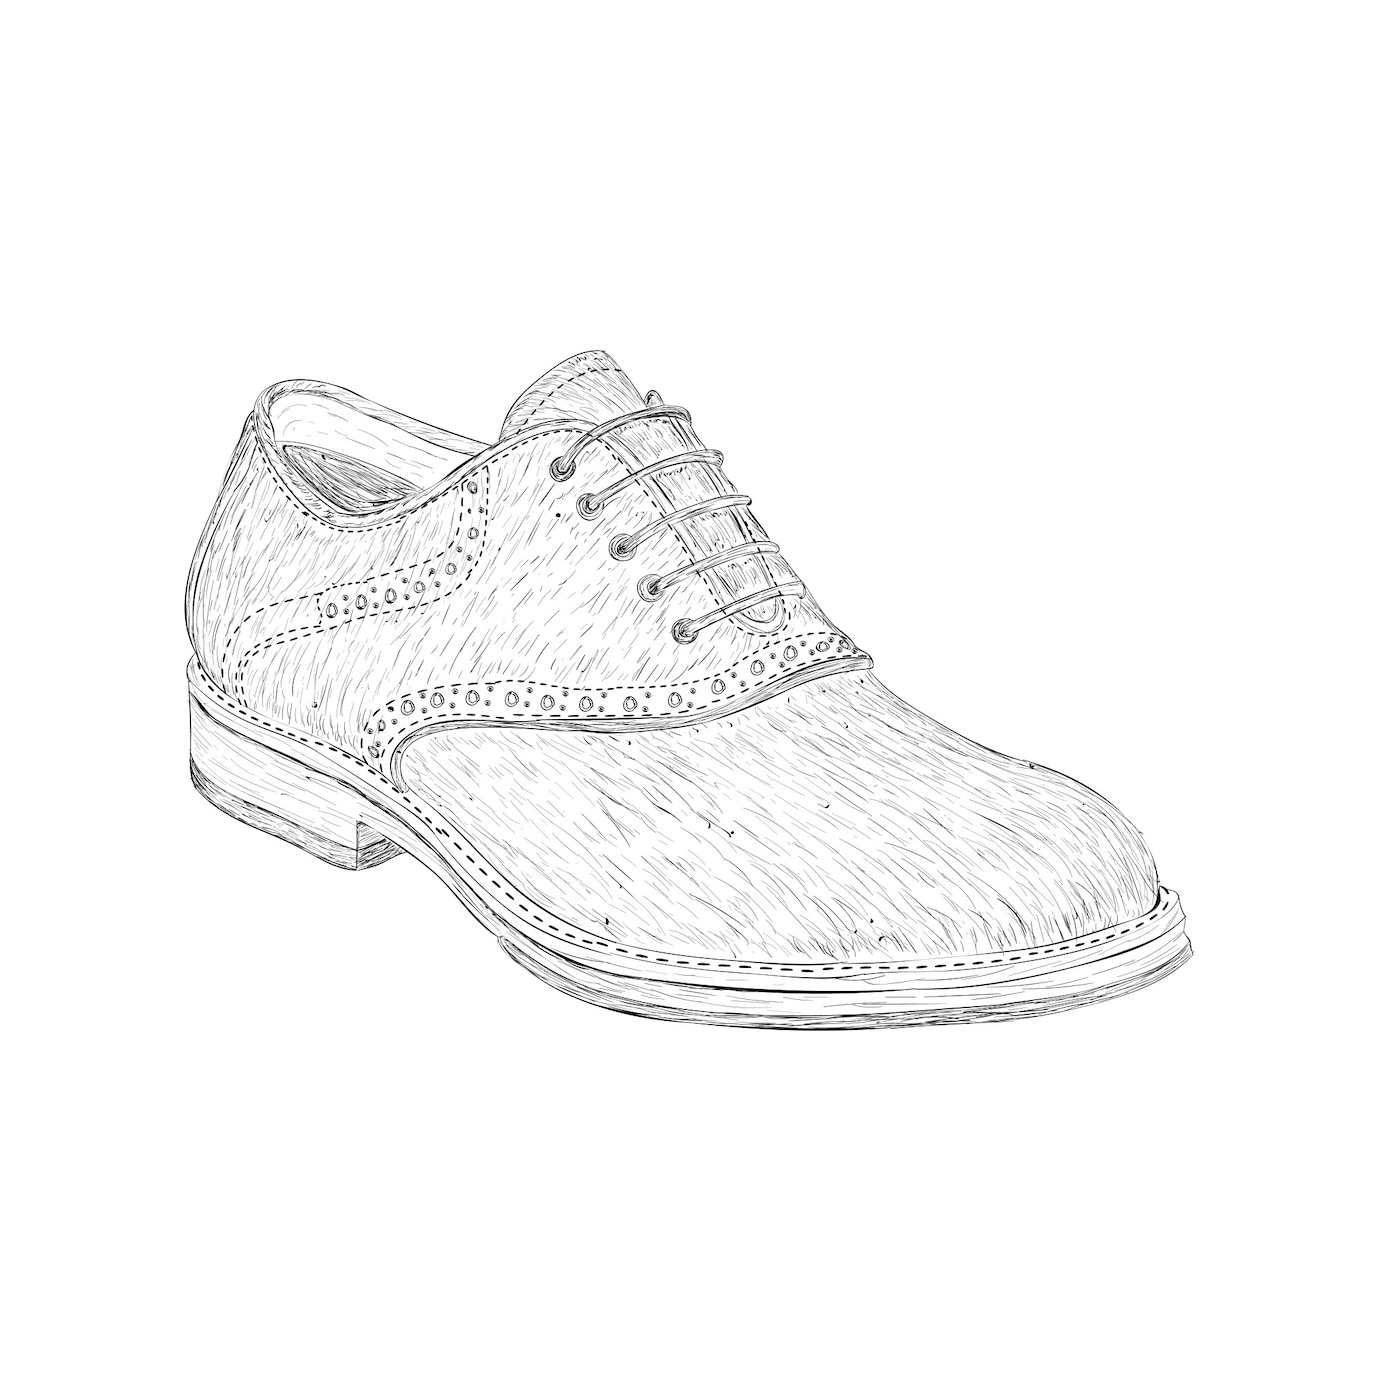 Premium Vector | Boot shoe illustration in hand drawn vector